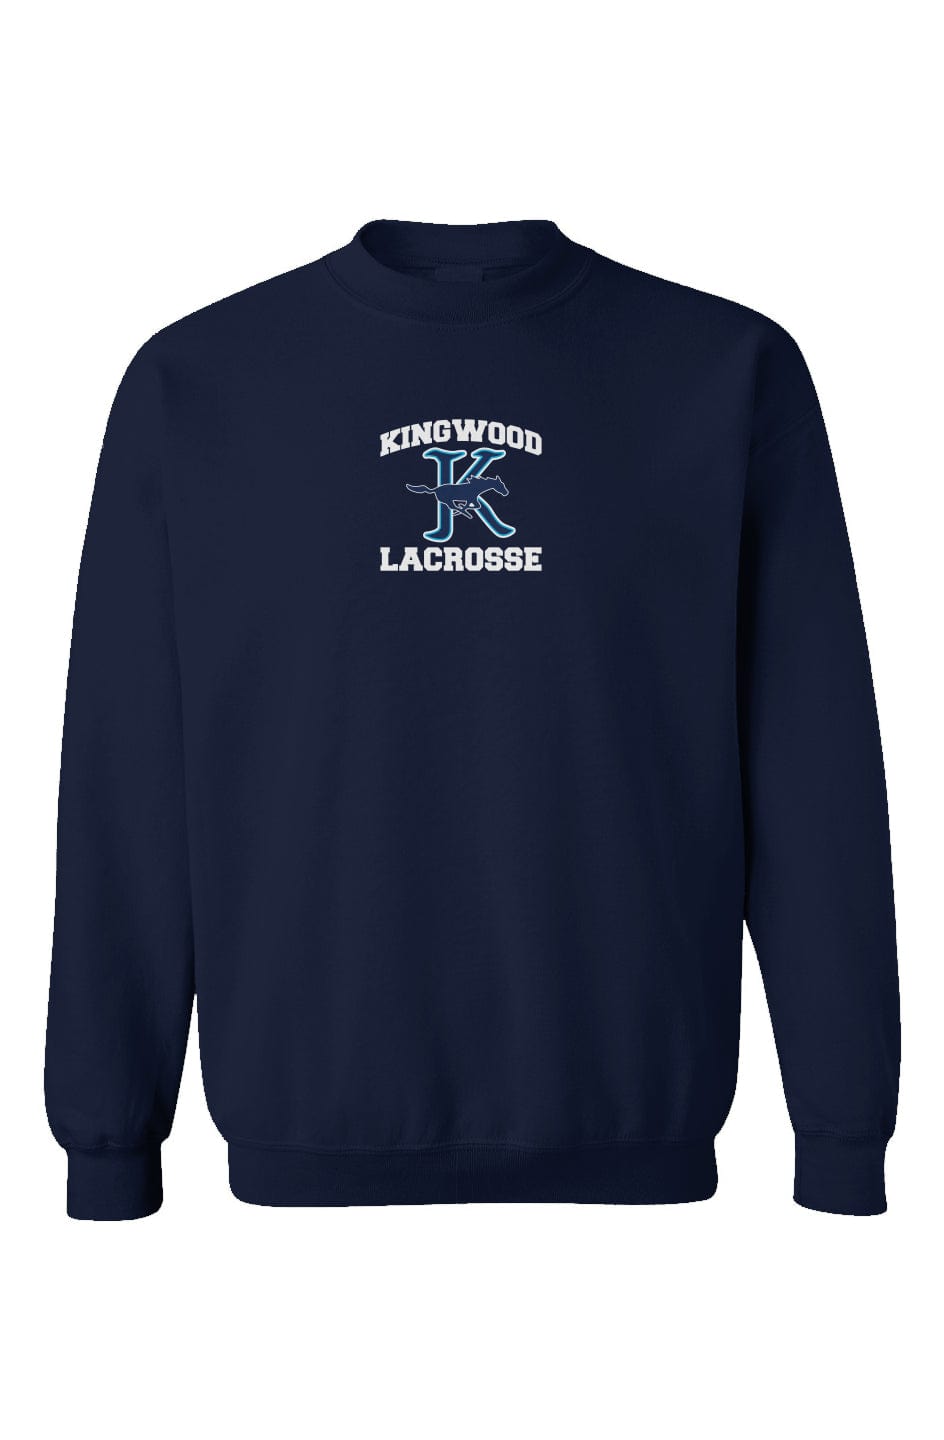 Kingwood Youth Lacrosse Premium Youth Sweatshirt Signature Lacrosse